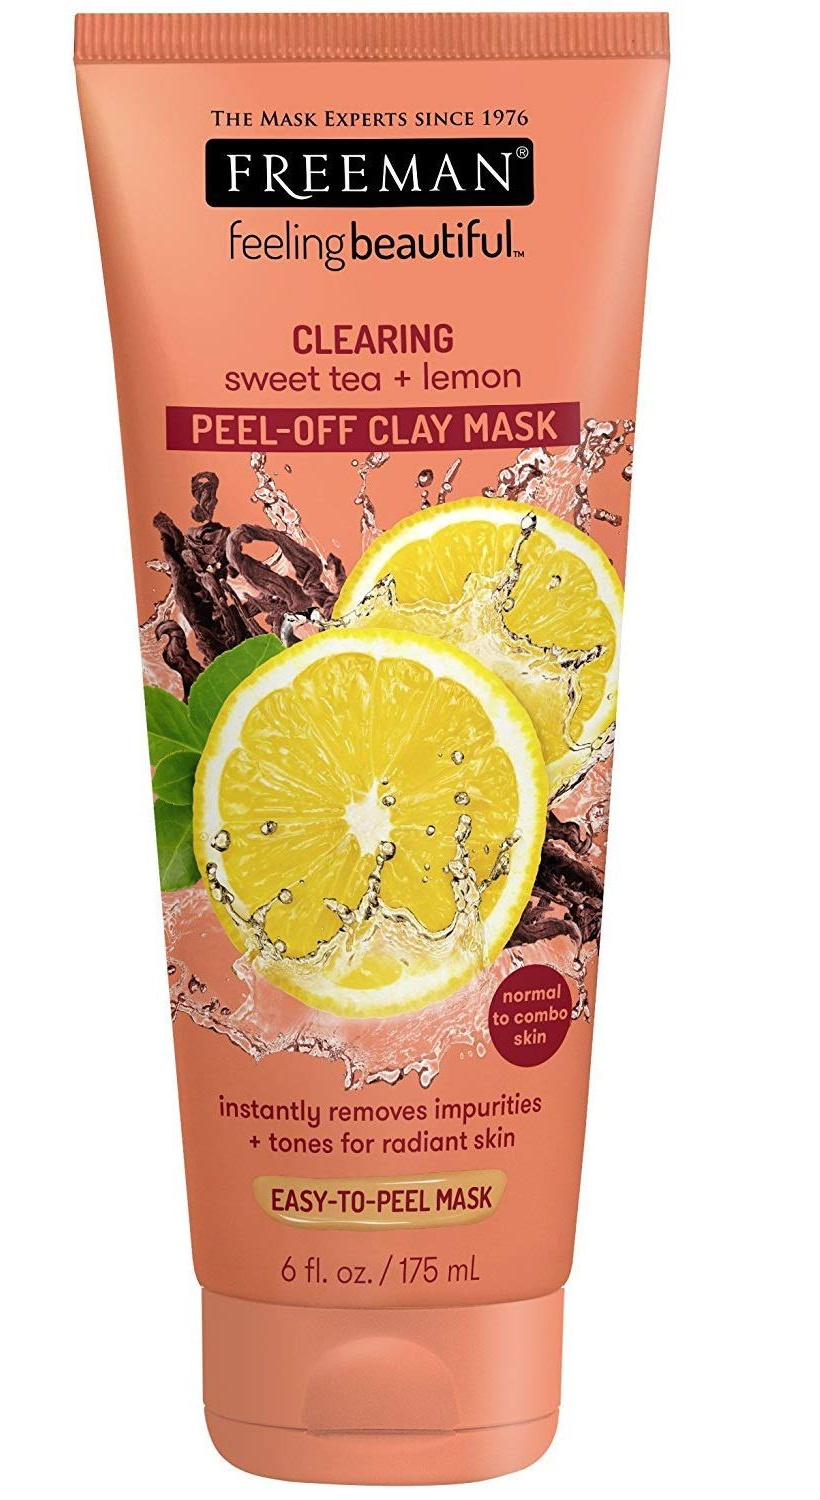 Freeman Clearing Sweet Tea + Lemon Peel-off Clay Mask